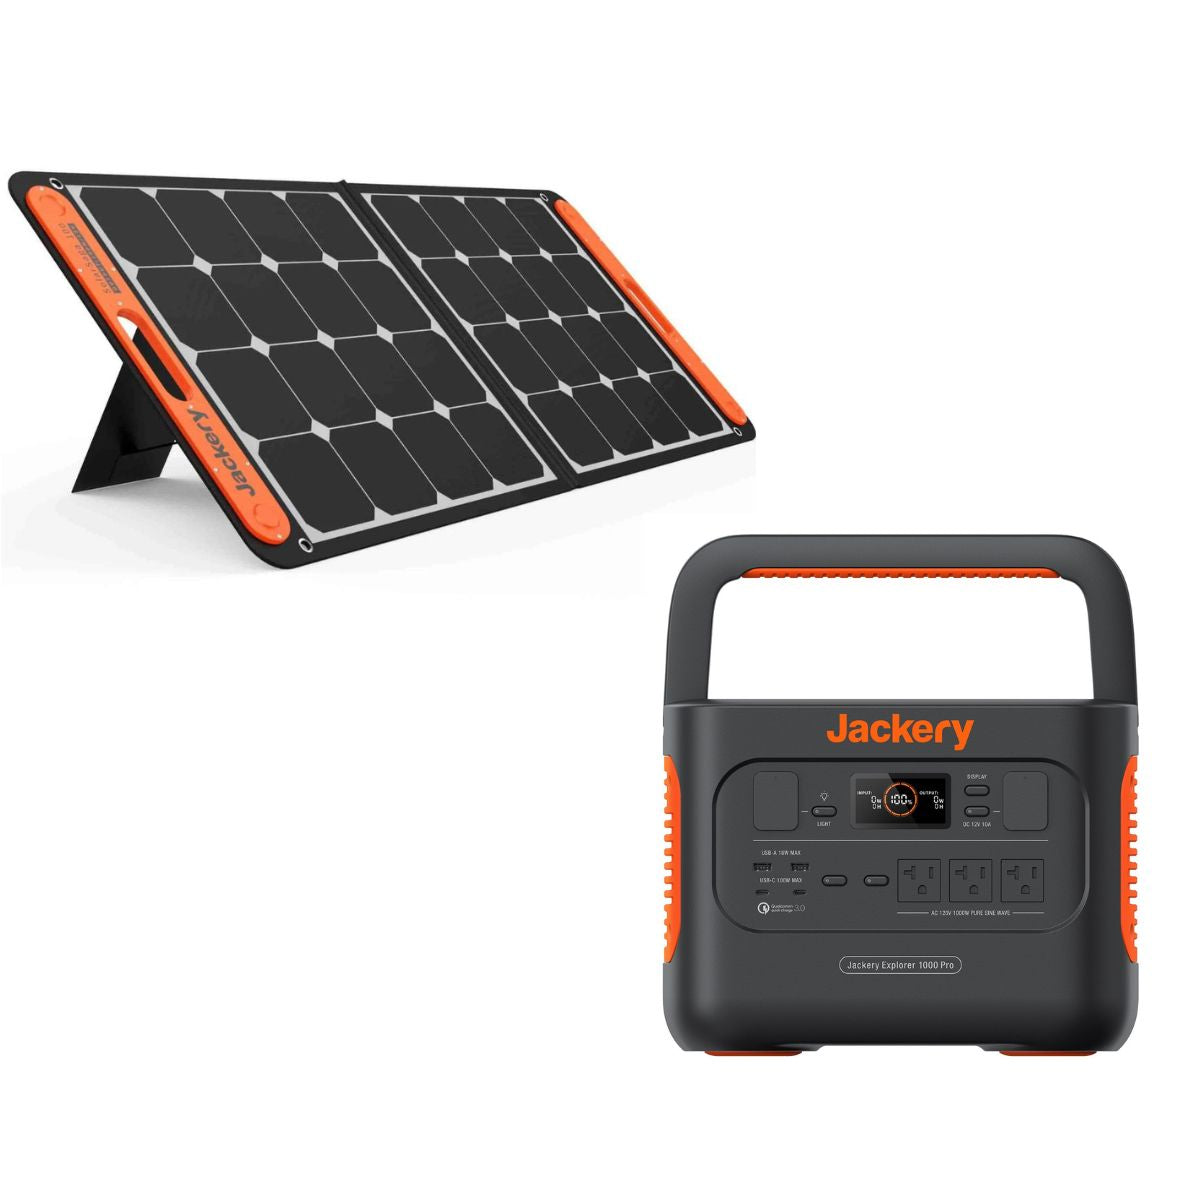 Jackery Launches Lightest Solar Generators Yet 